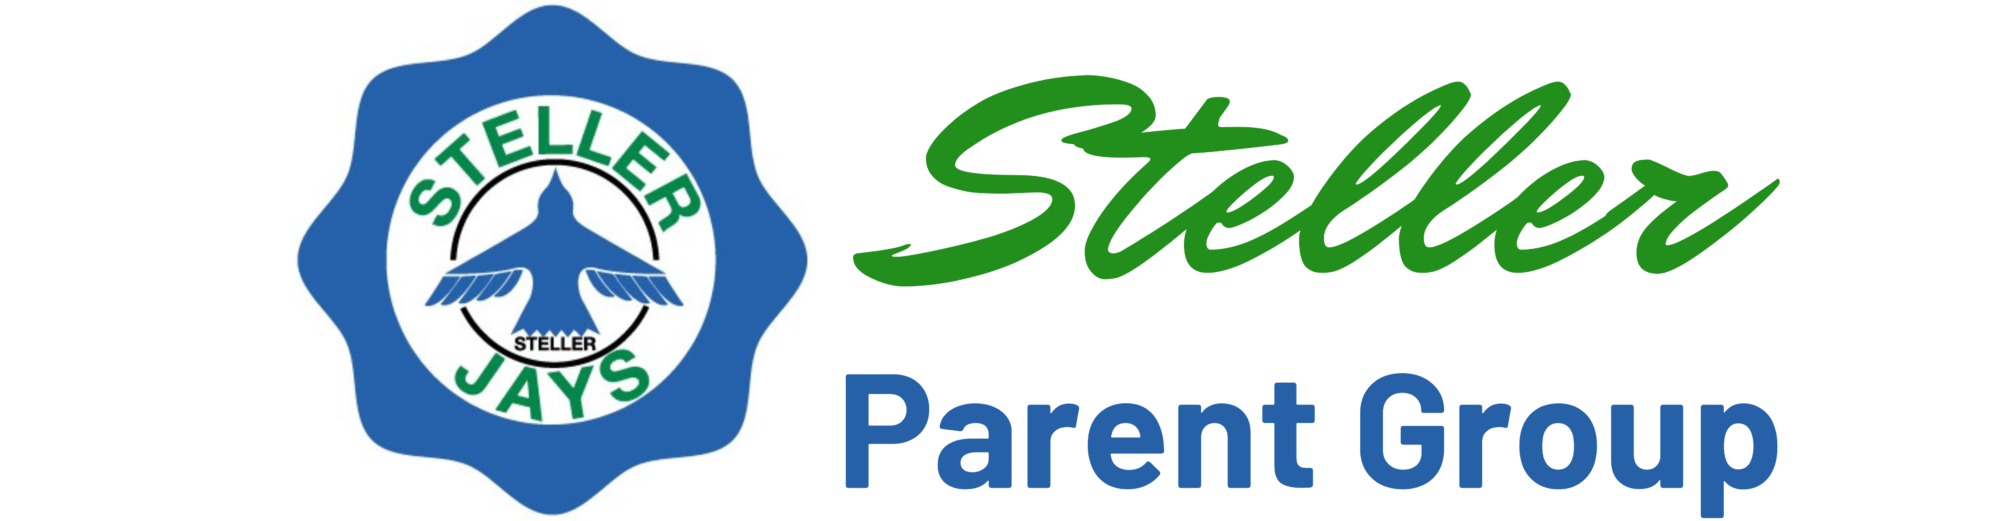 Steller Parent Group